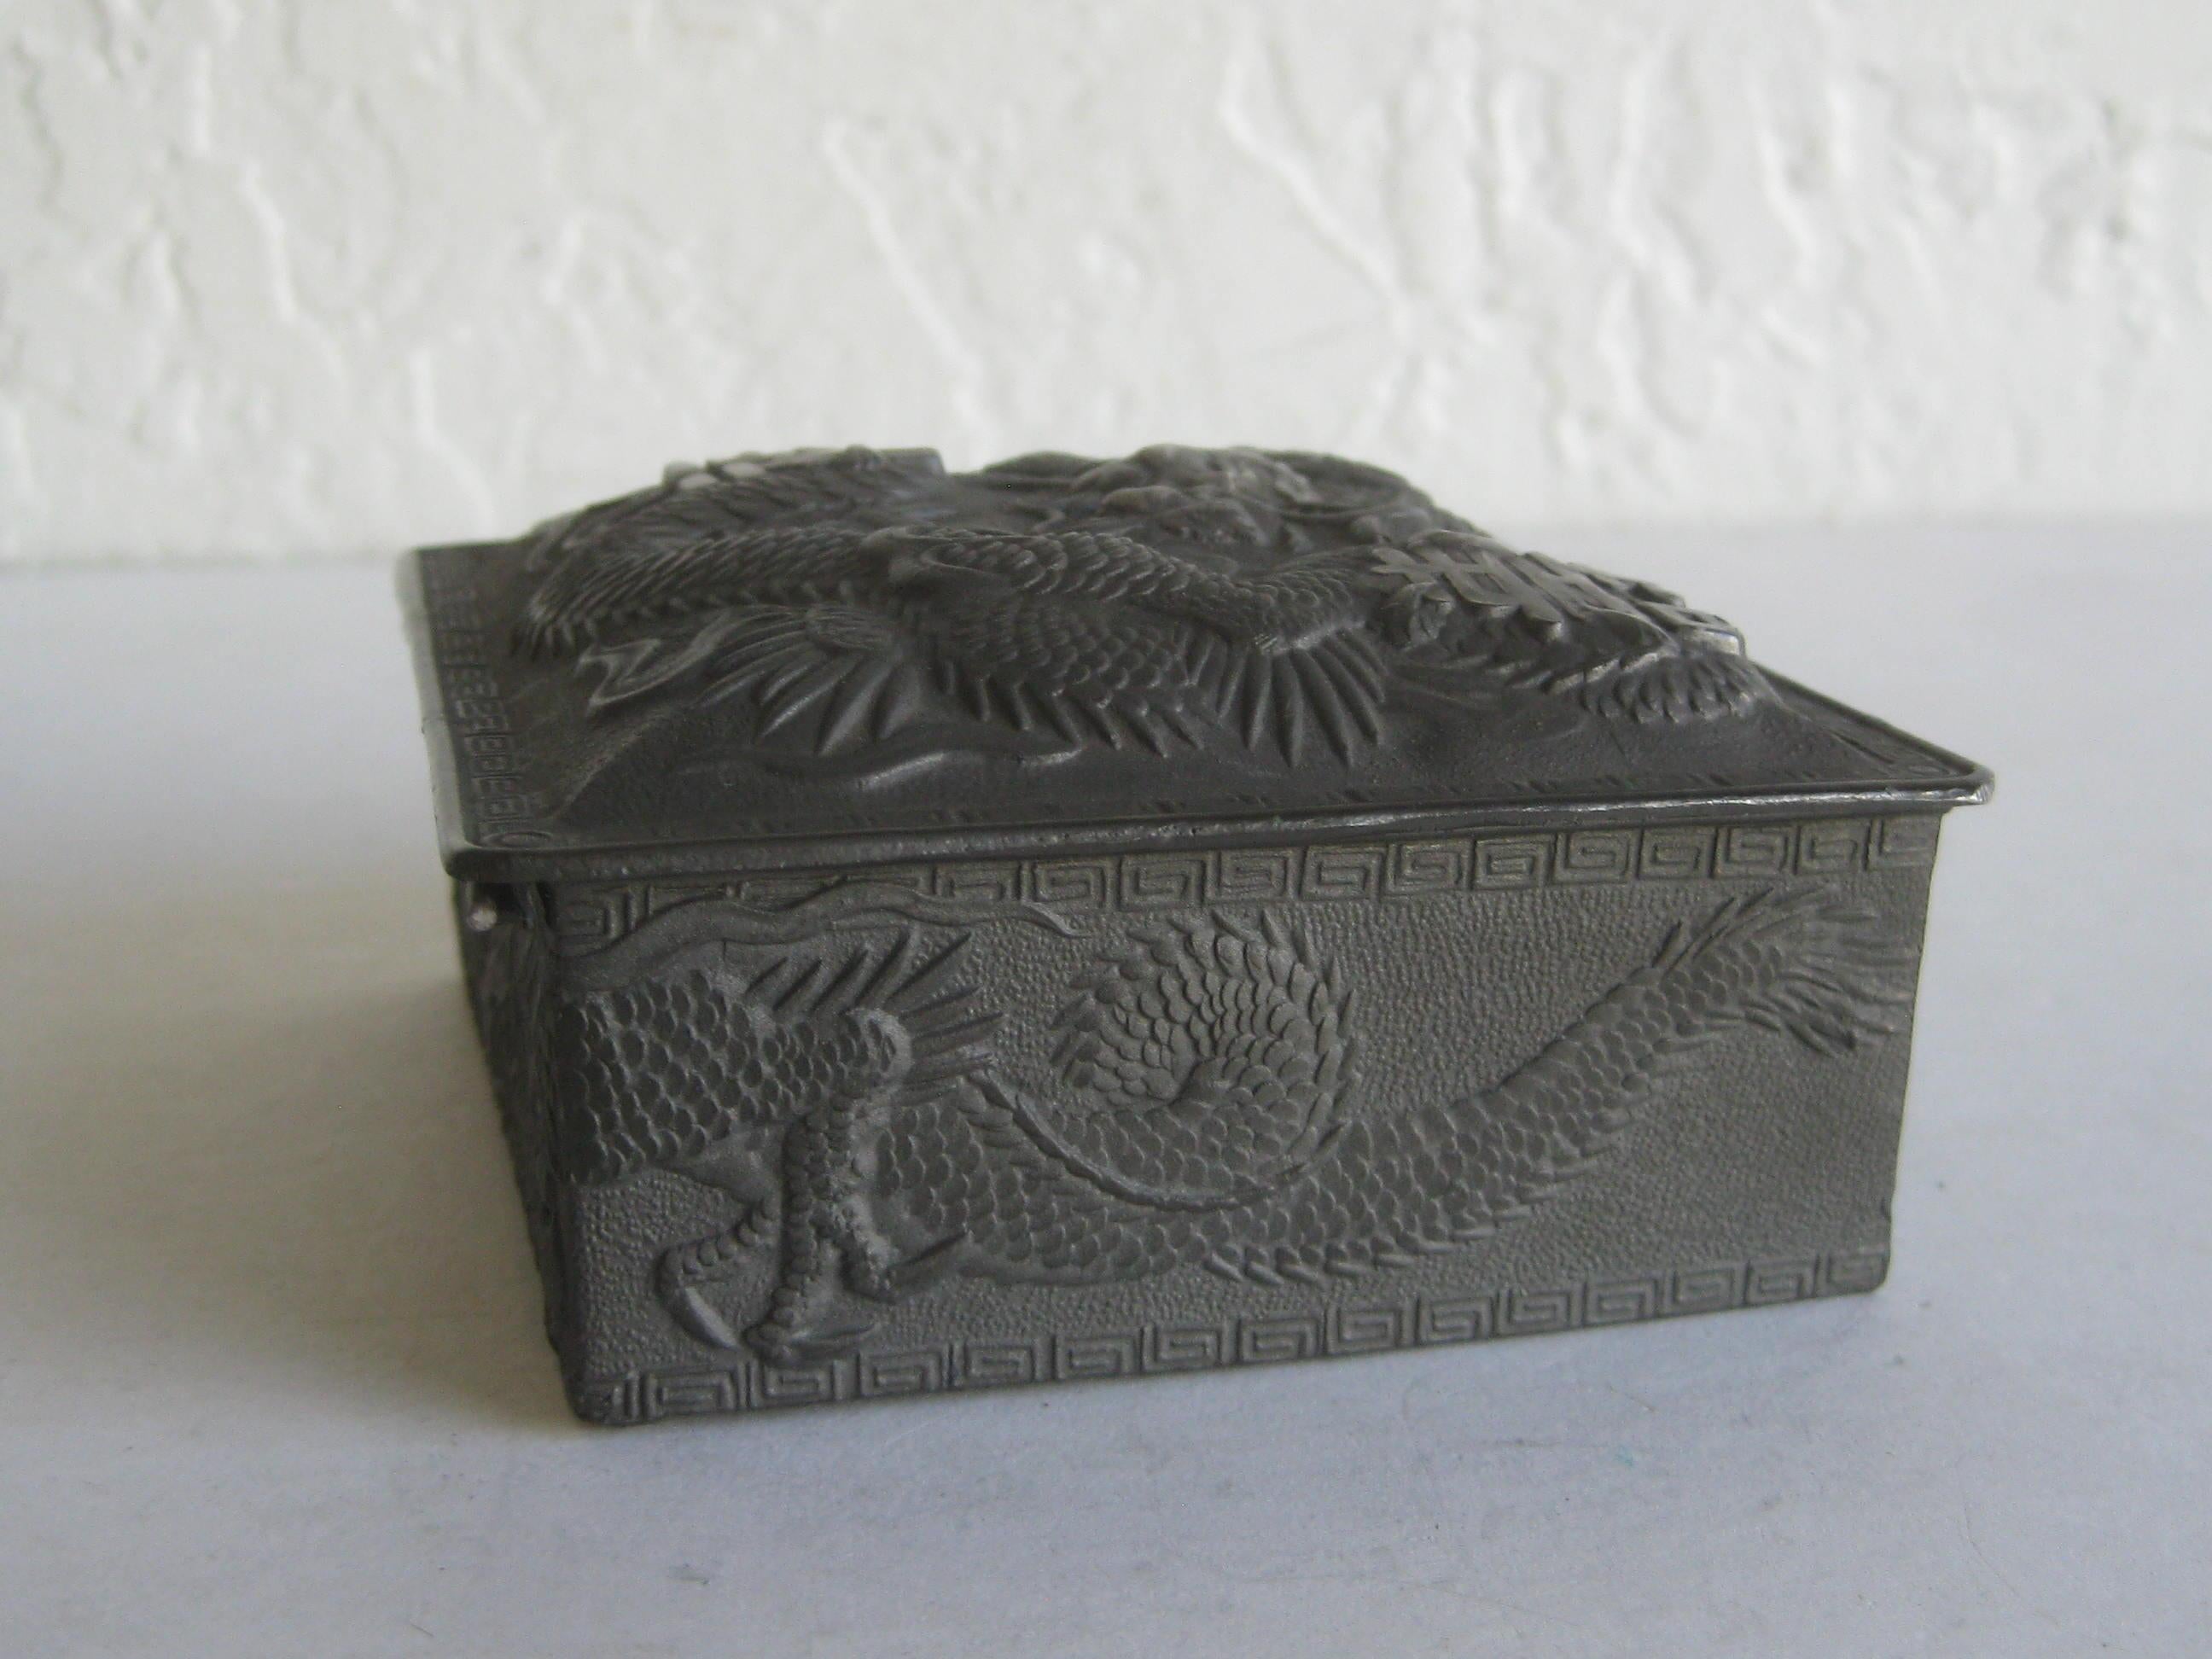 Antique Japanese Metal Relief Dragon Design Lidded Stash Cigarette Tobacco Box 2